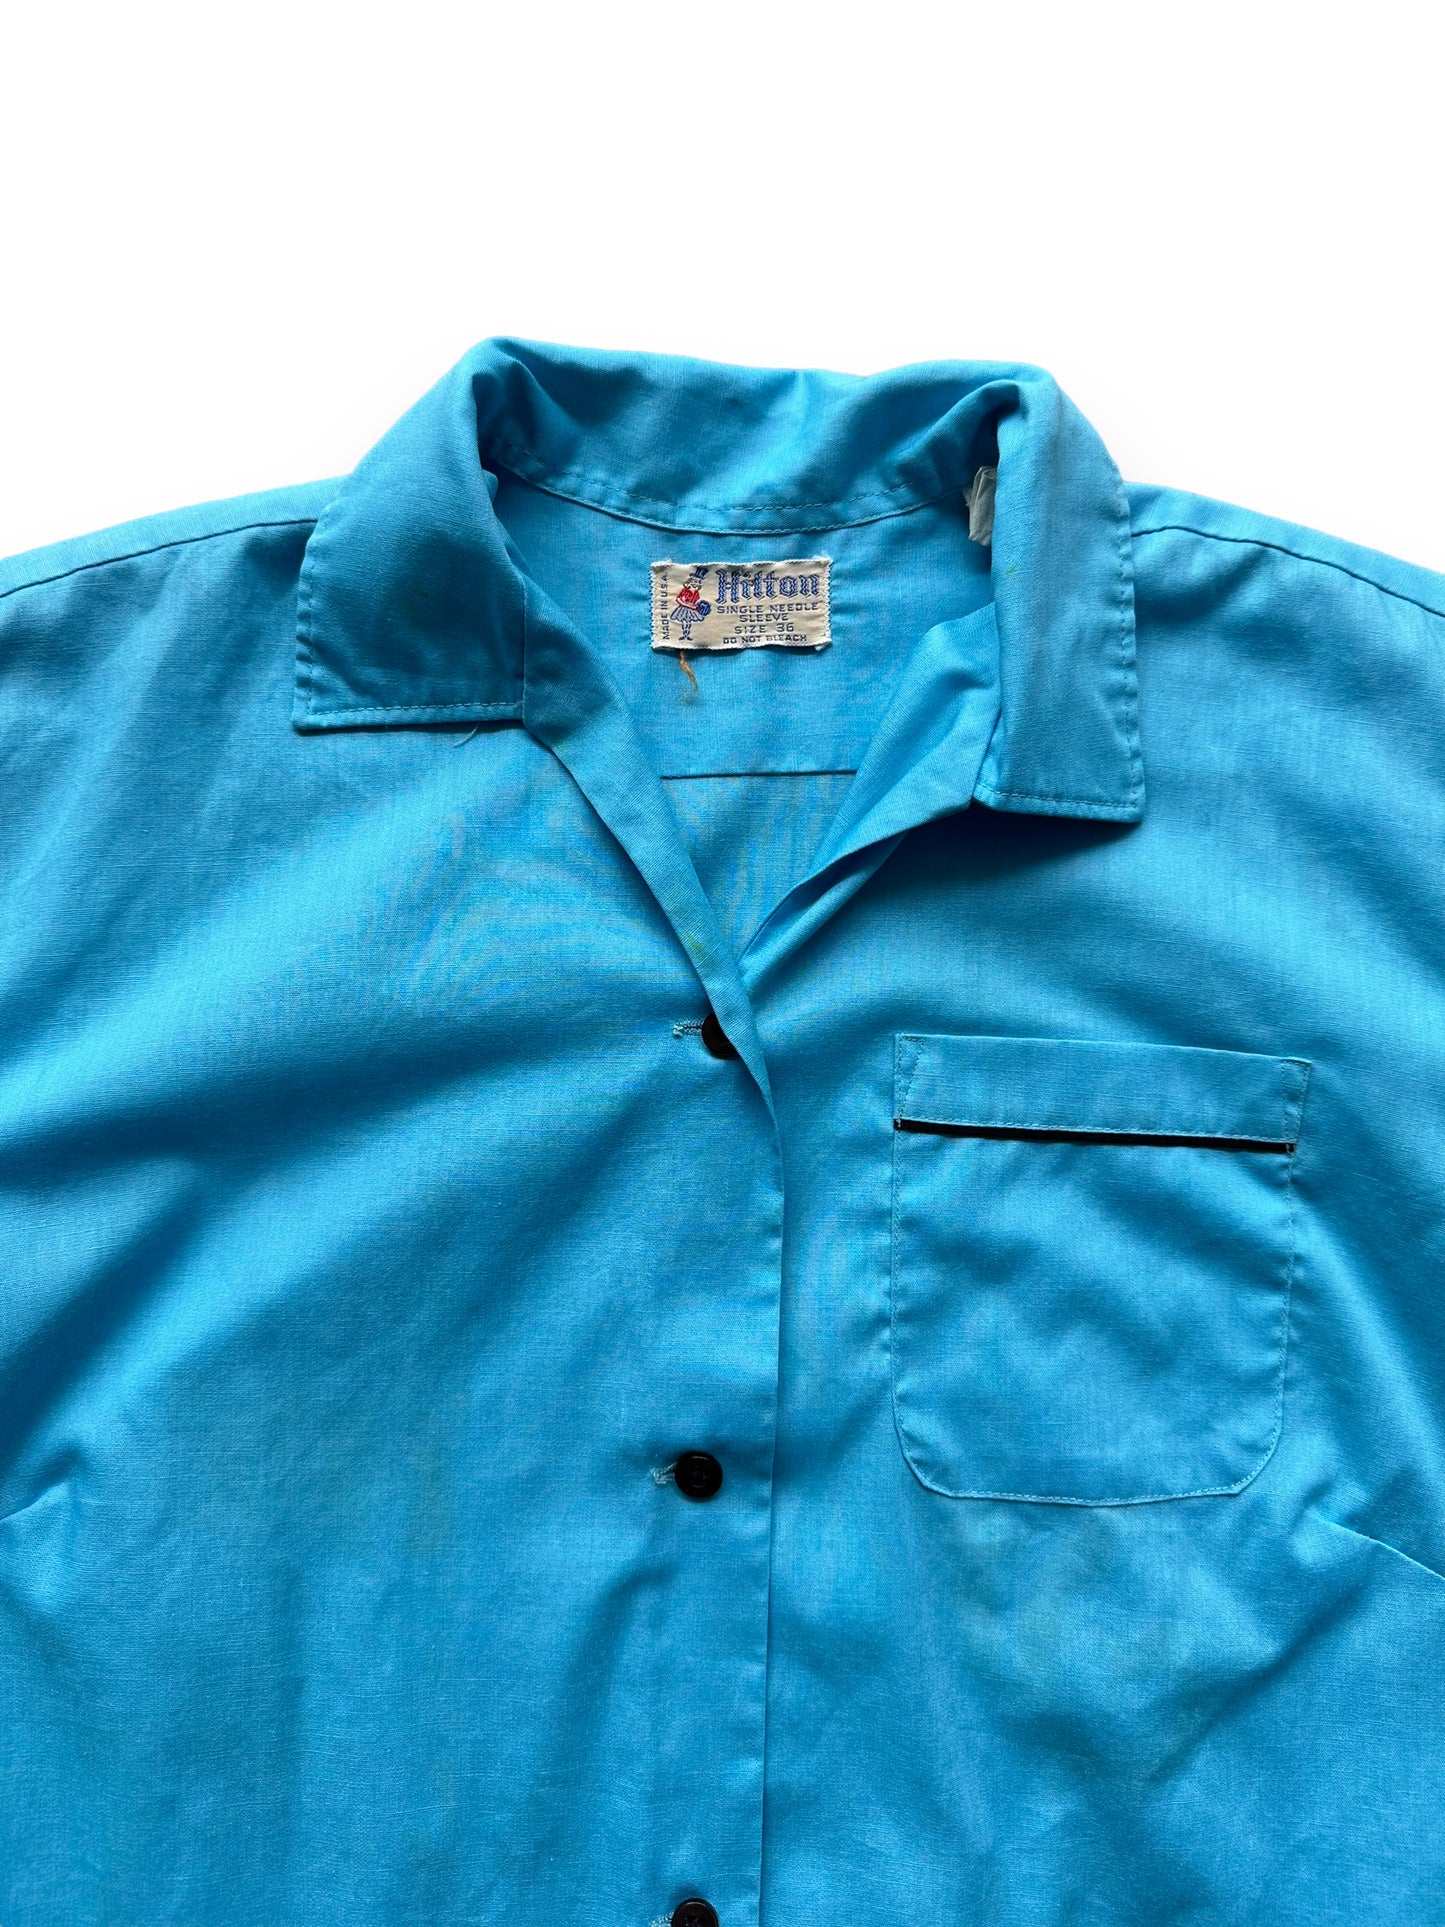 Collar of Vintage "Shoreline High" Chainstitched Bowling Shirt SZ 36 | Vintage Bowling Shirt Seattle | Barn Owl Vintage Seattle